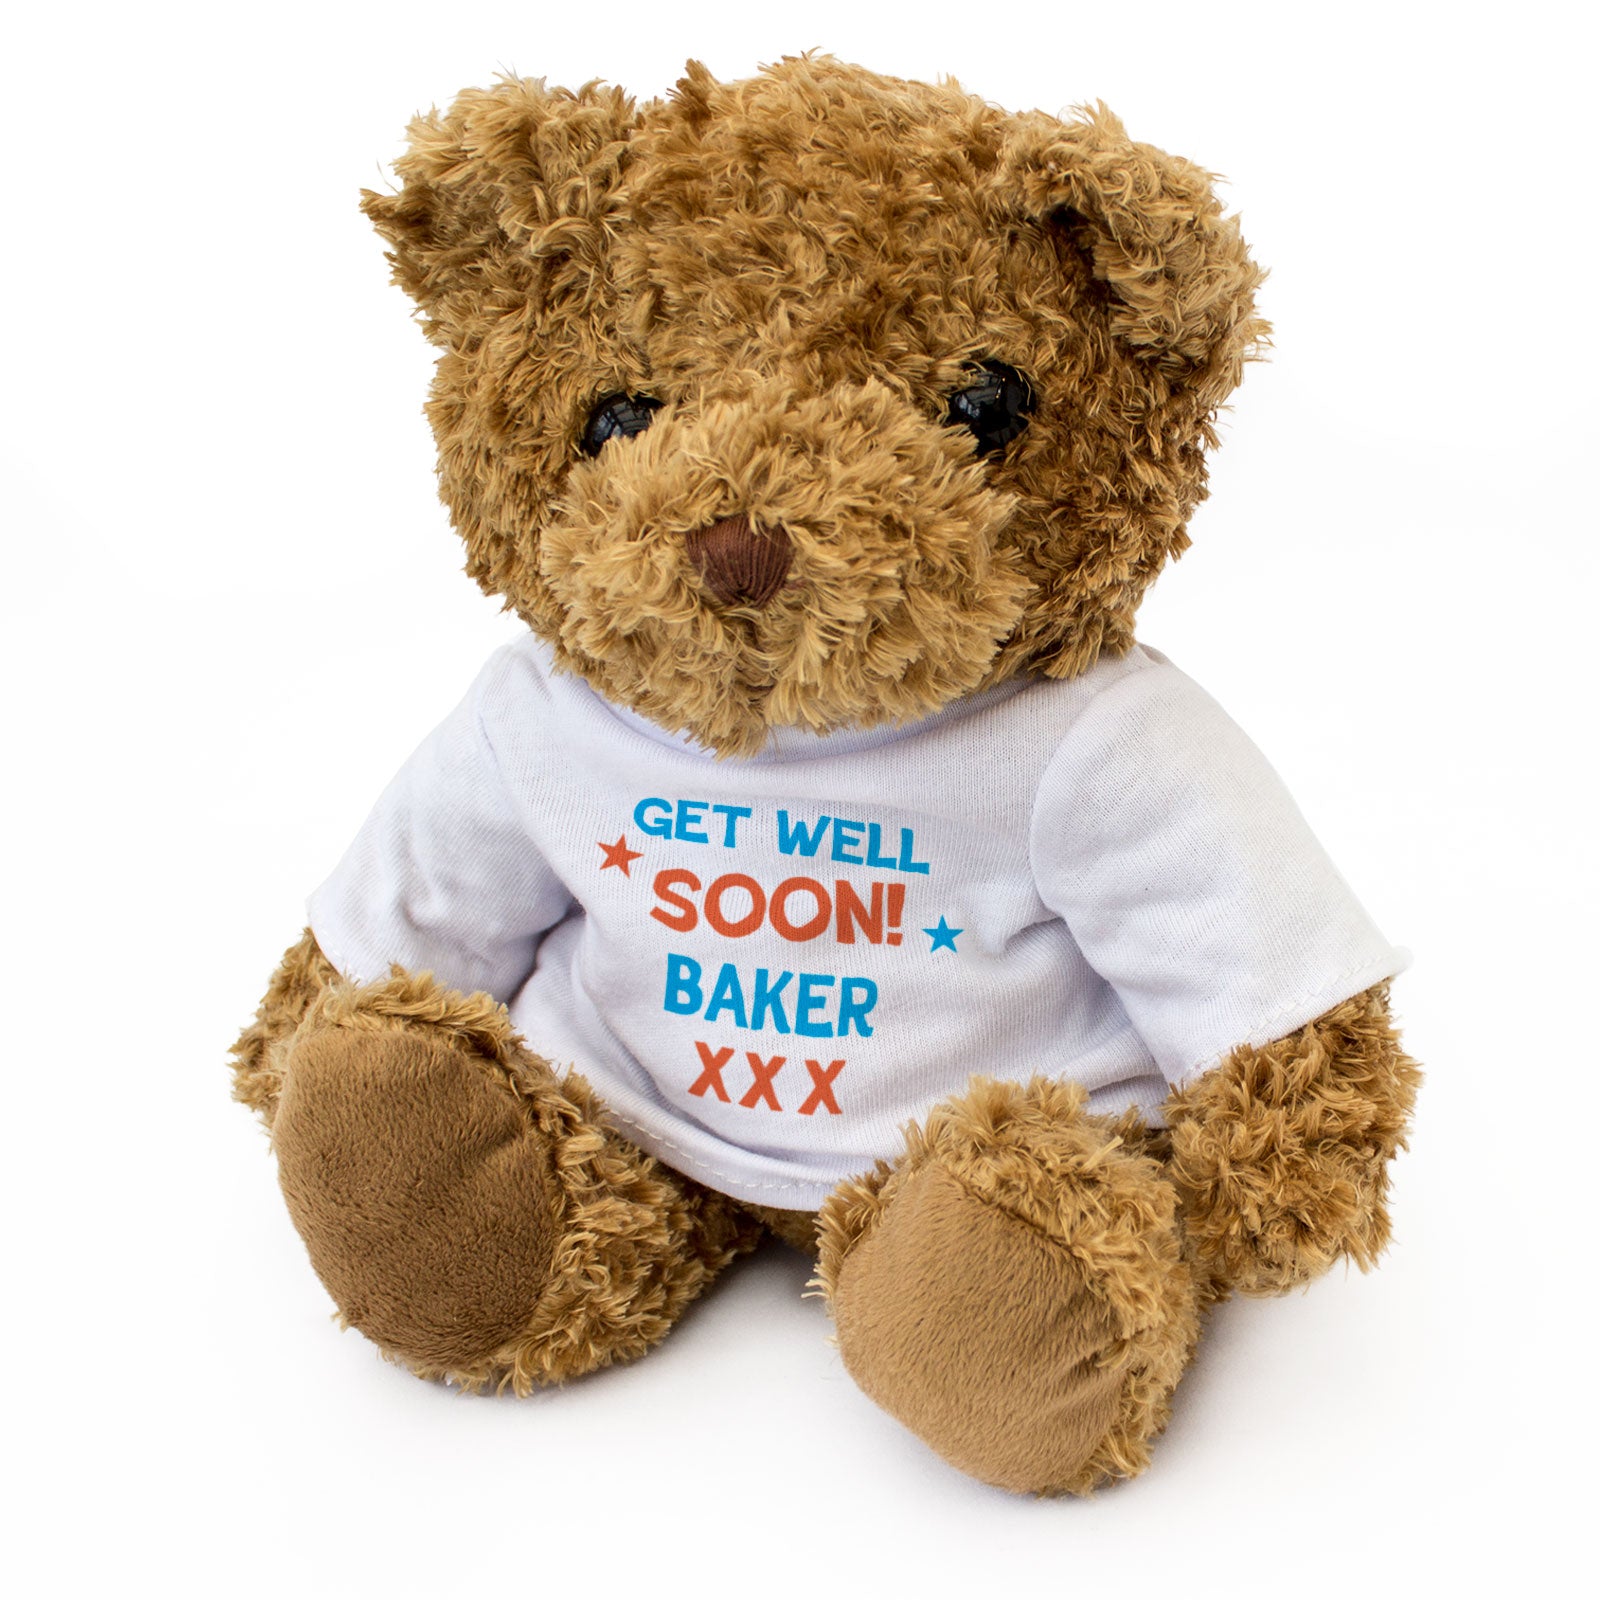 Get Well Soon Baker - Teddy Bear